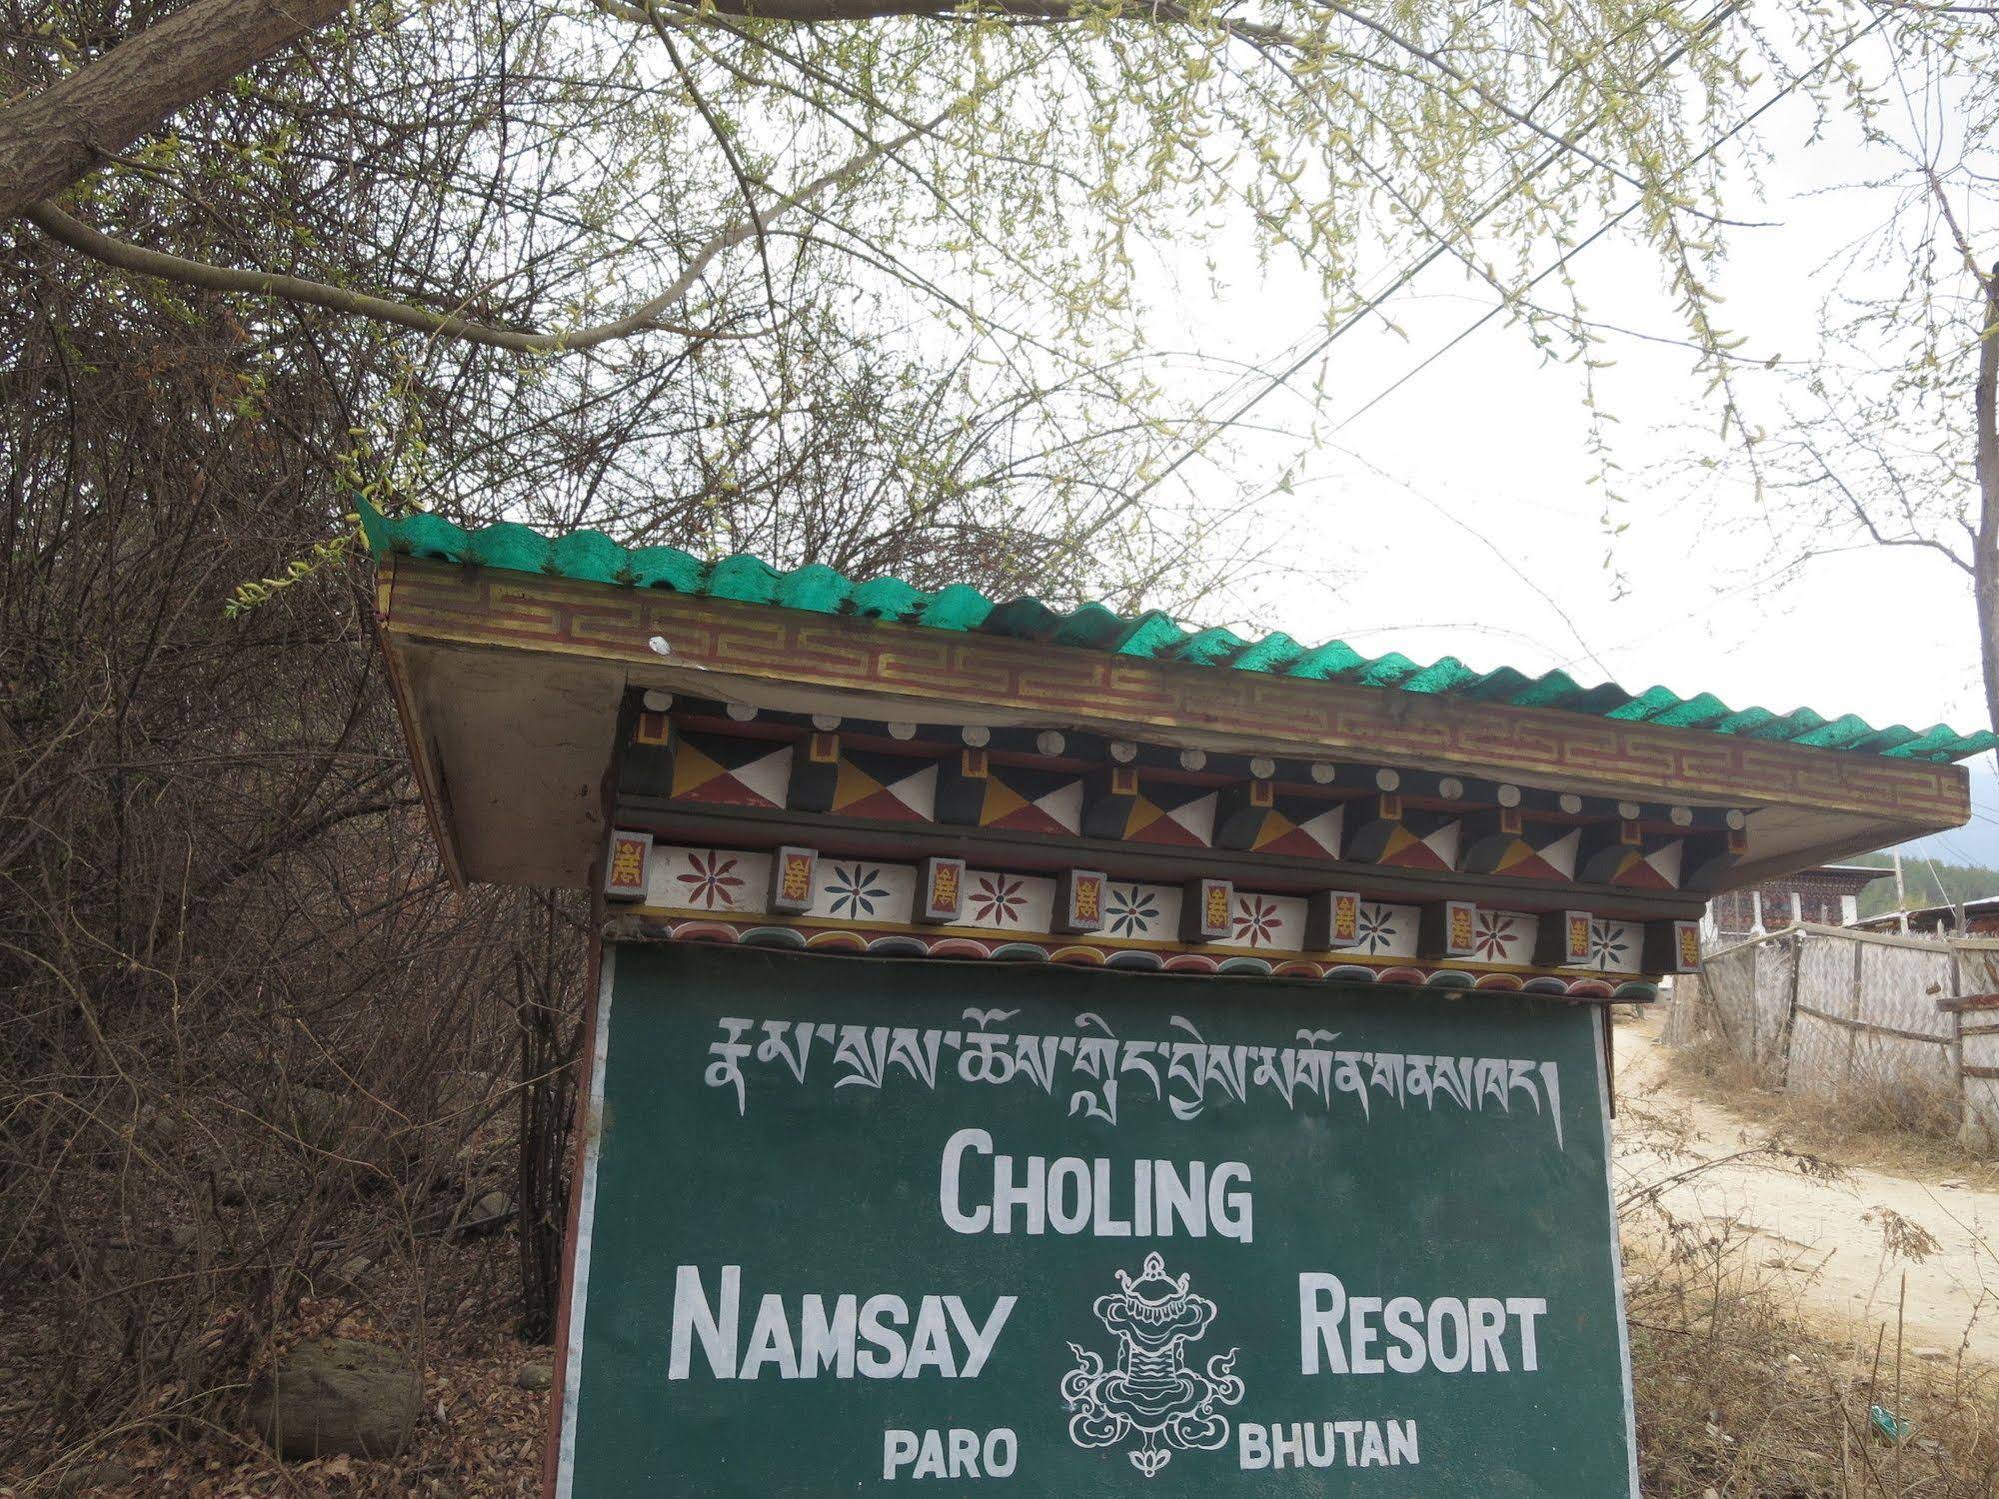 Namsay Chholing Resort